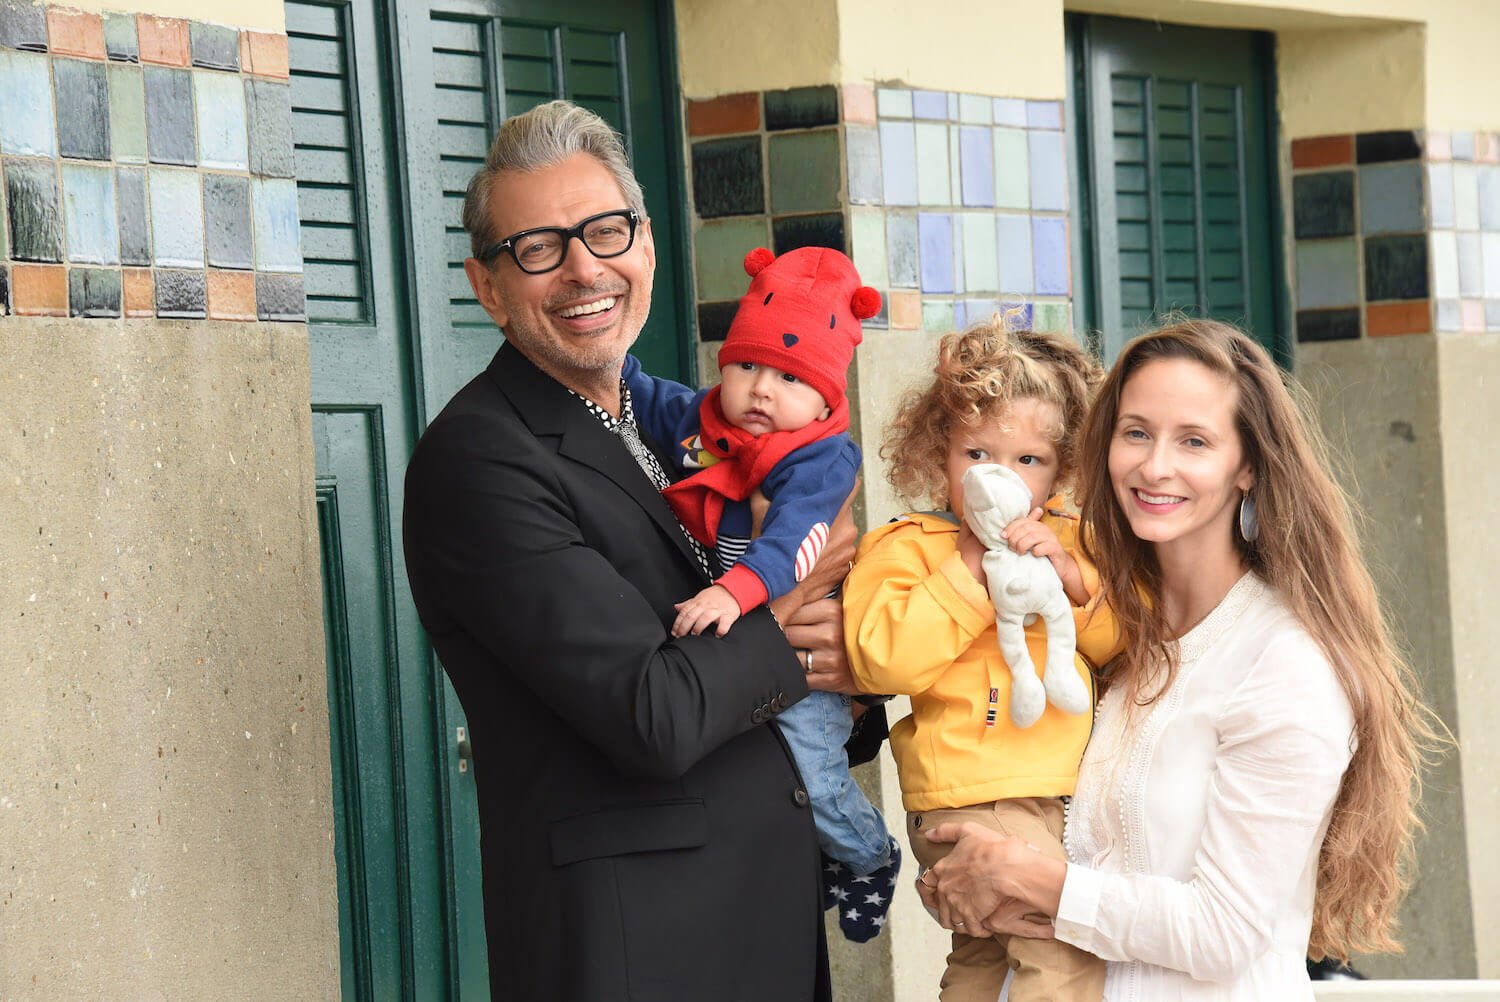 Jeff Goldblum smiling with wife, Emilie Livingston, and their children, River Joe Goldblum and Charlie Ocean Goldblum